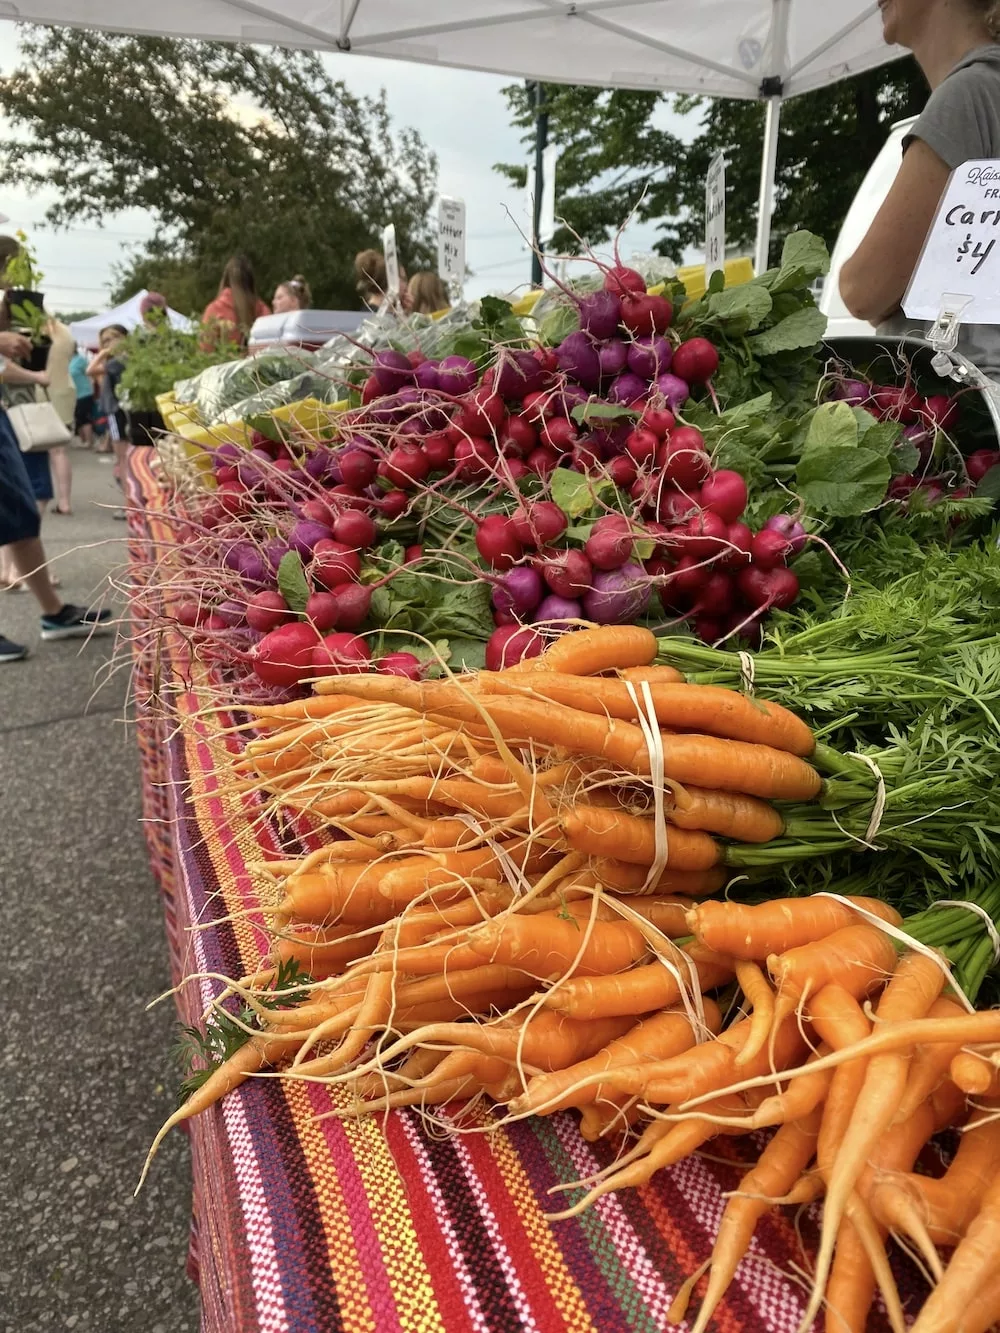 Table of carrots and radishes at the Cedar Falls Farmers' Market in Cedar Falls, Iowa